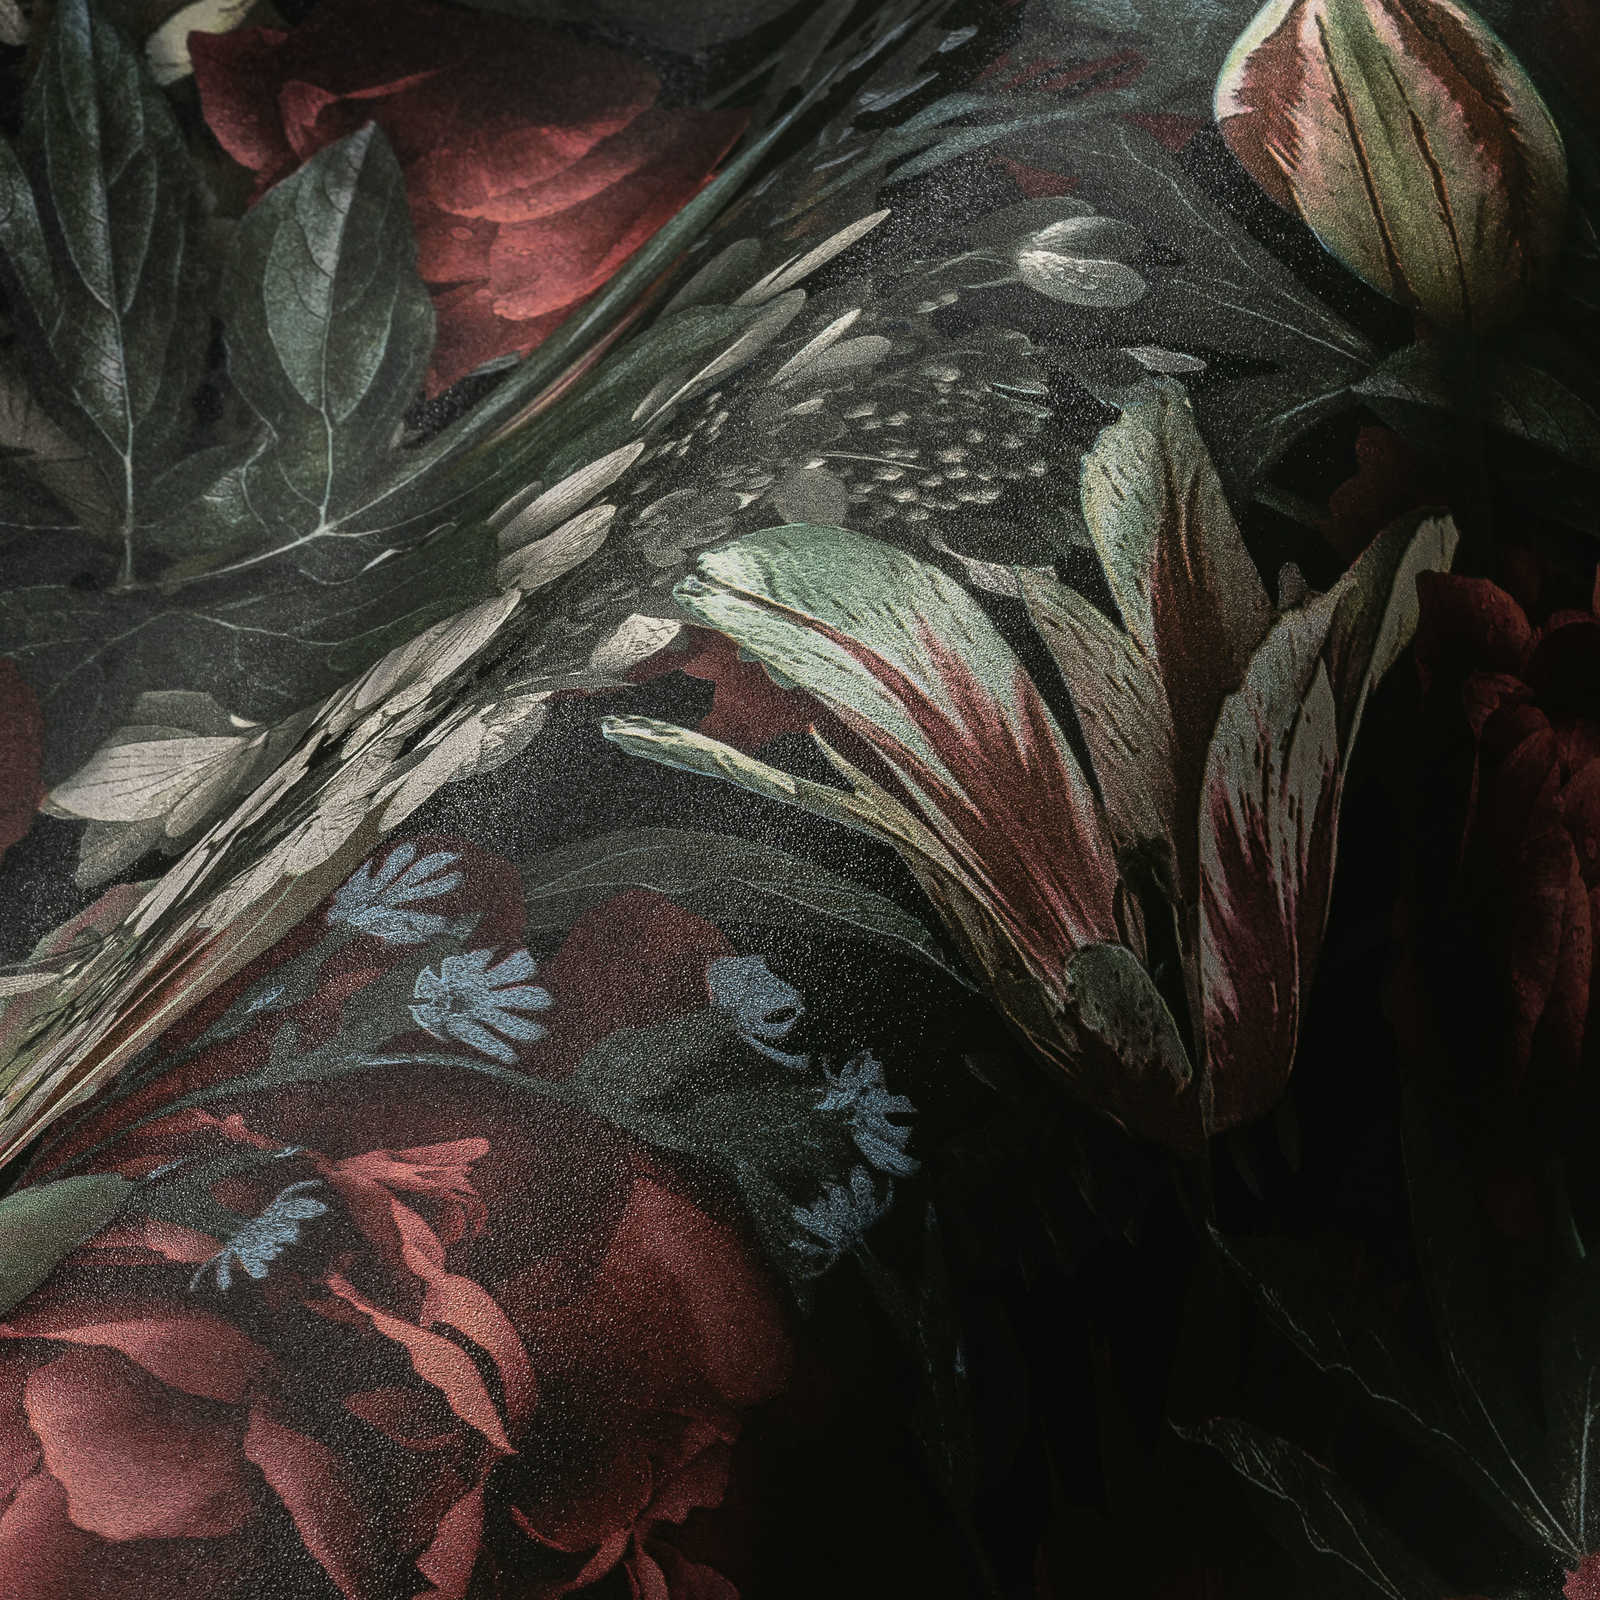             Bloemenbehang rozen & tulpen vintage stijl - groen, rood, crème
        